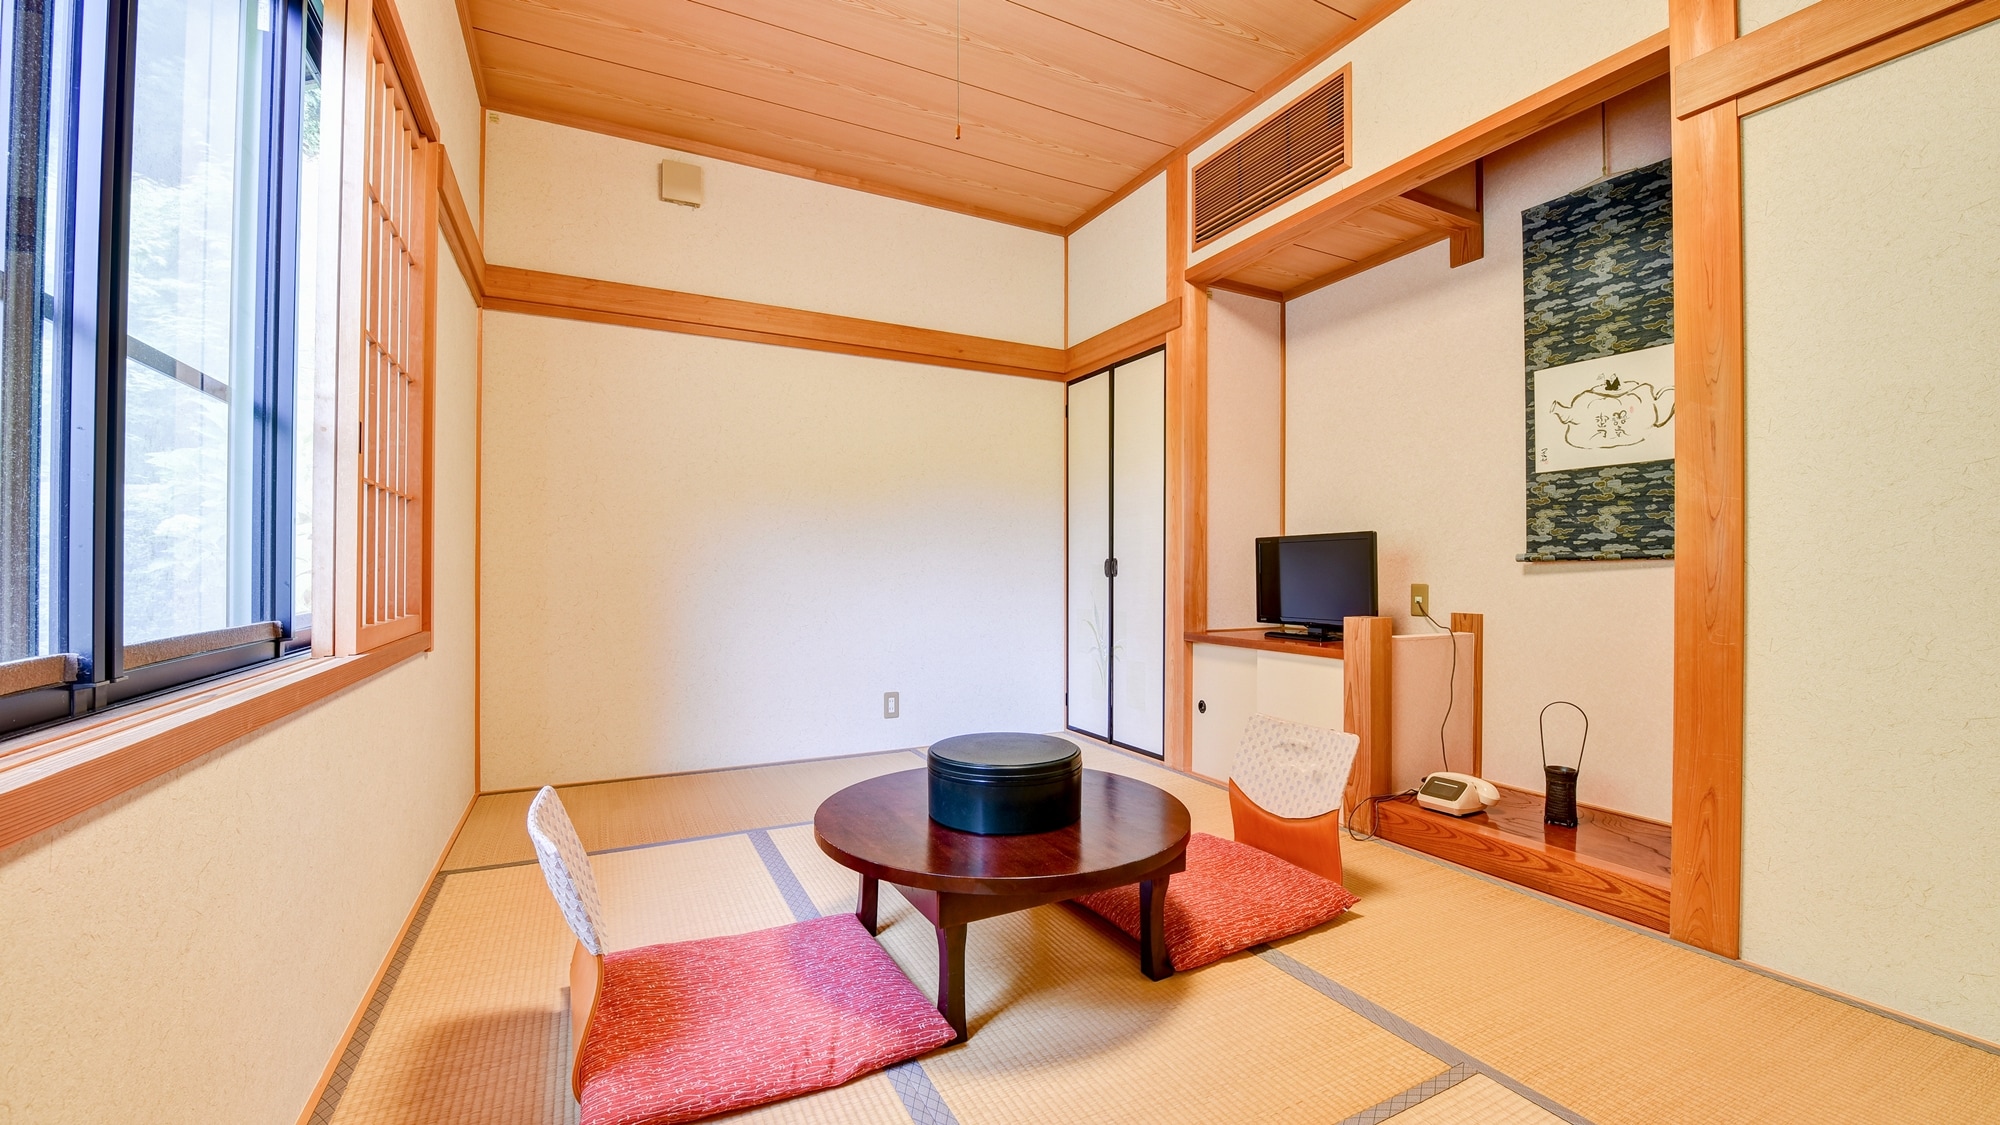 * Kamar bergaya Jepang 6 tikar tatami (contoh) Pasangan, pasangan, teman baik. Kamar untuk 2 orang.